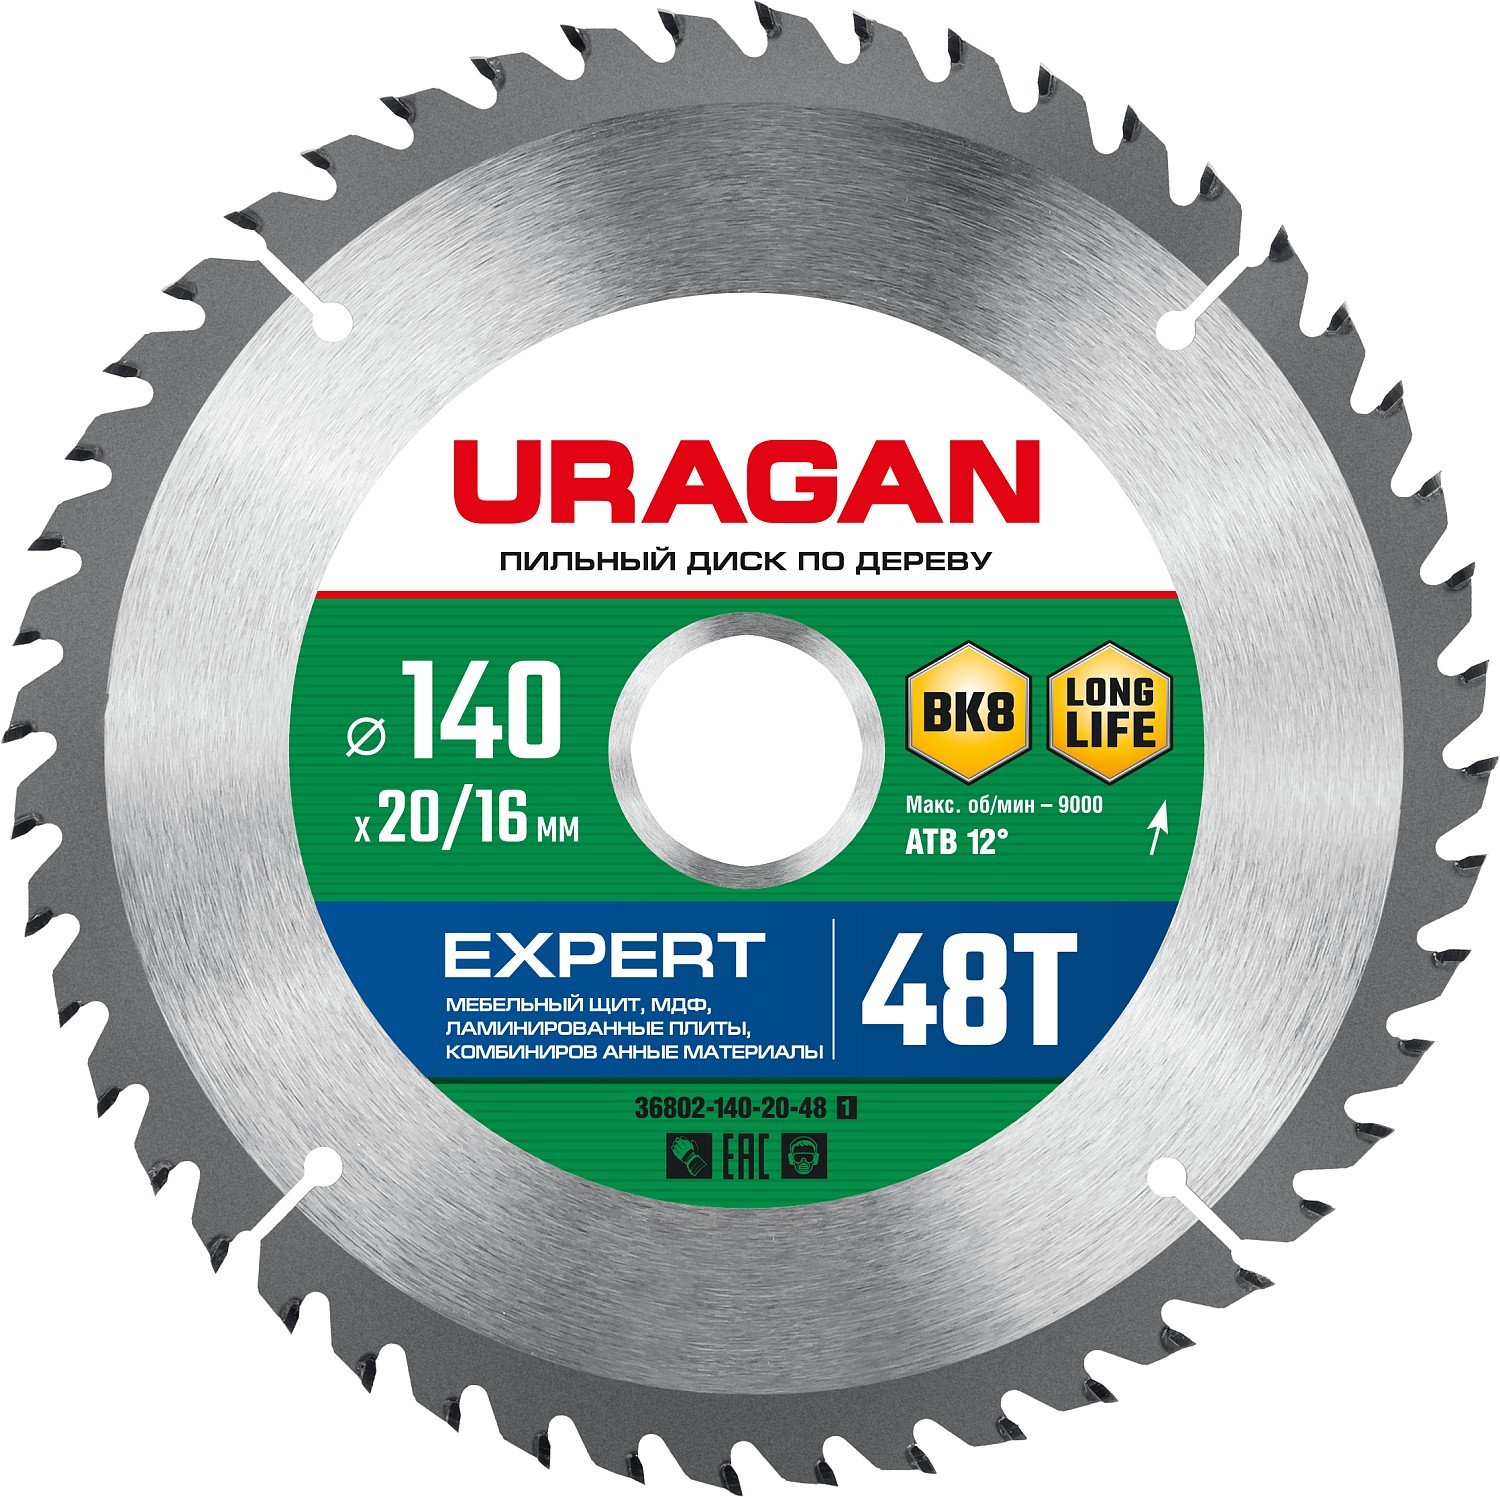 URAGAN Expert 14020 16 48,     (36802-140-20-48_z01)